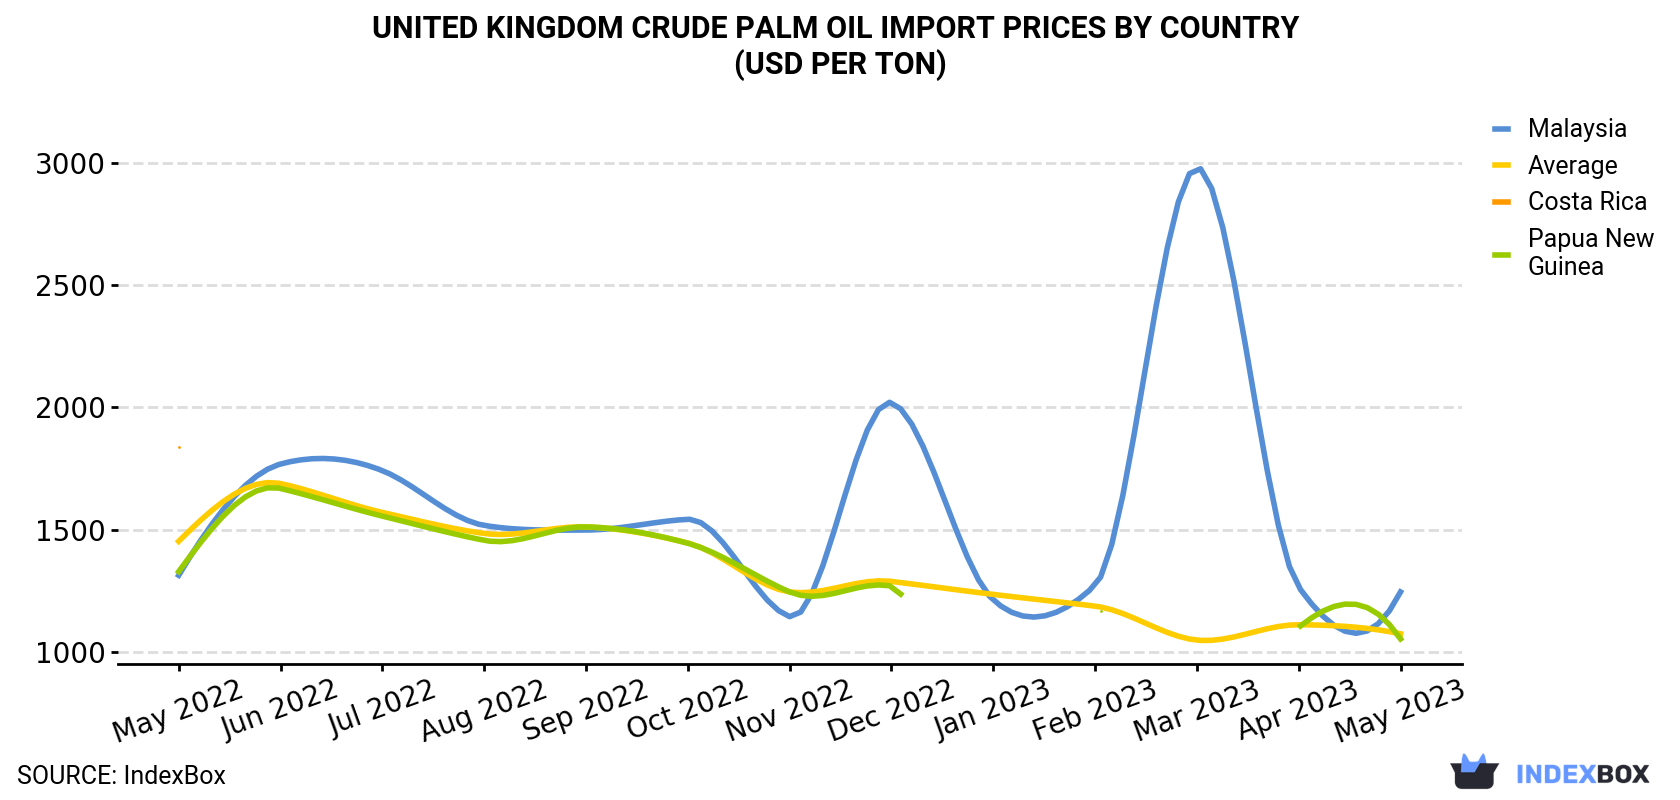 crude palm oil price